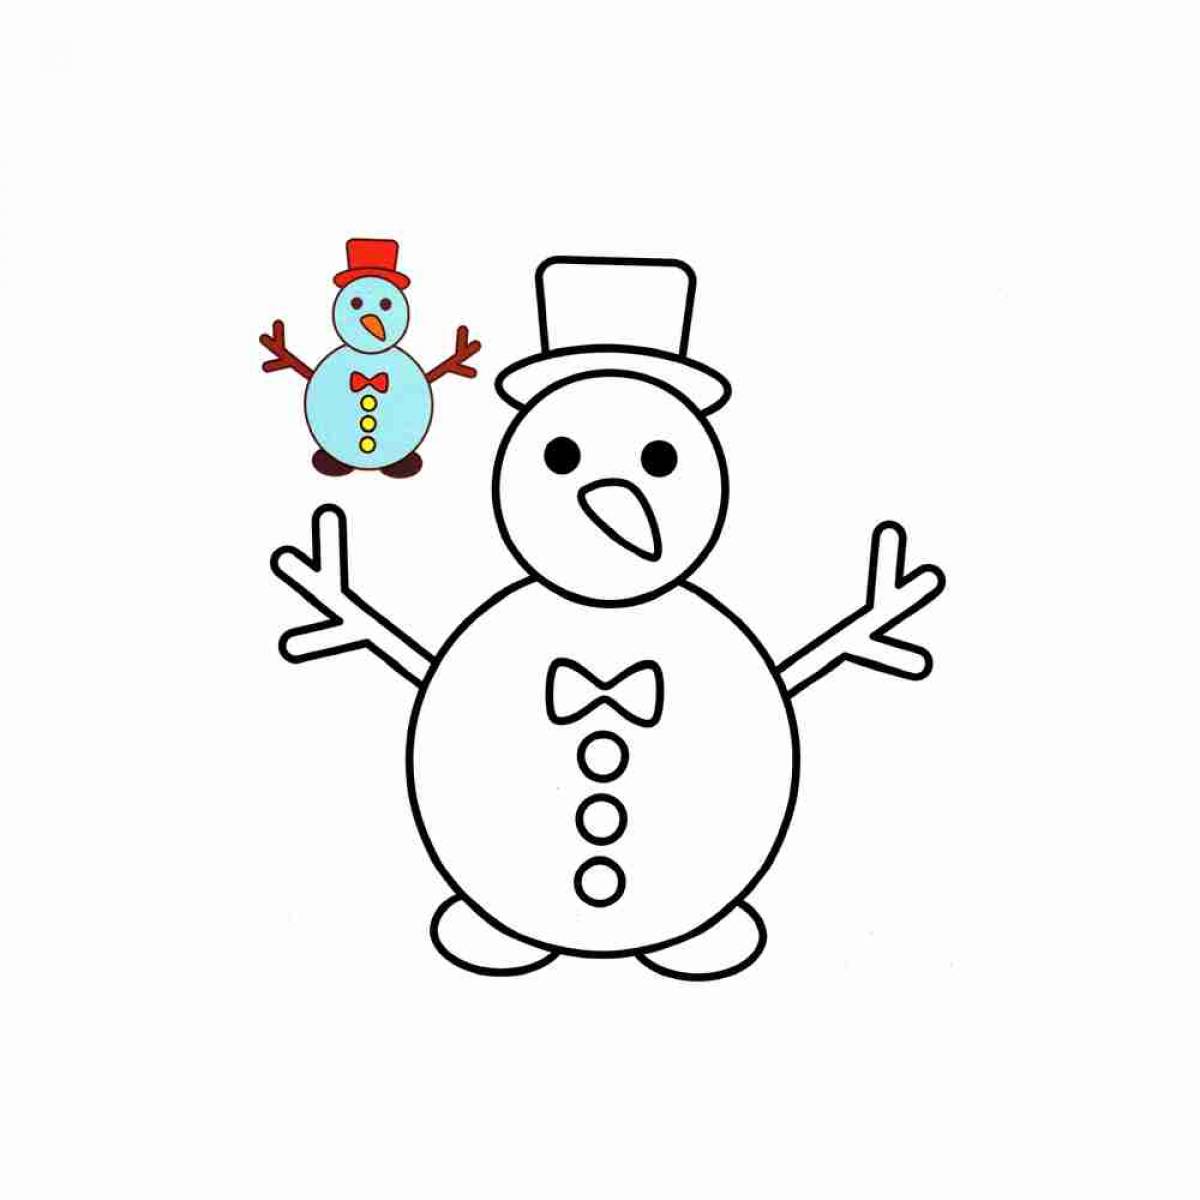 Fun snowman for kids #1